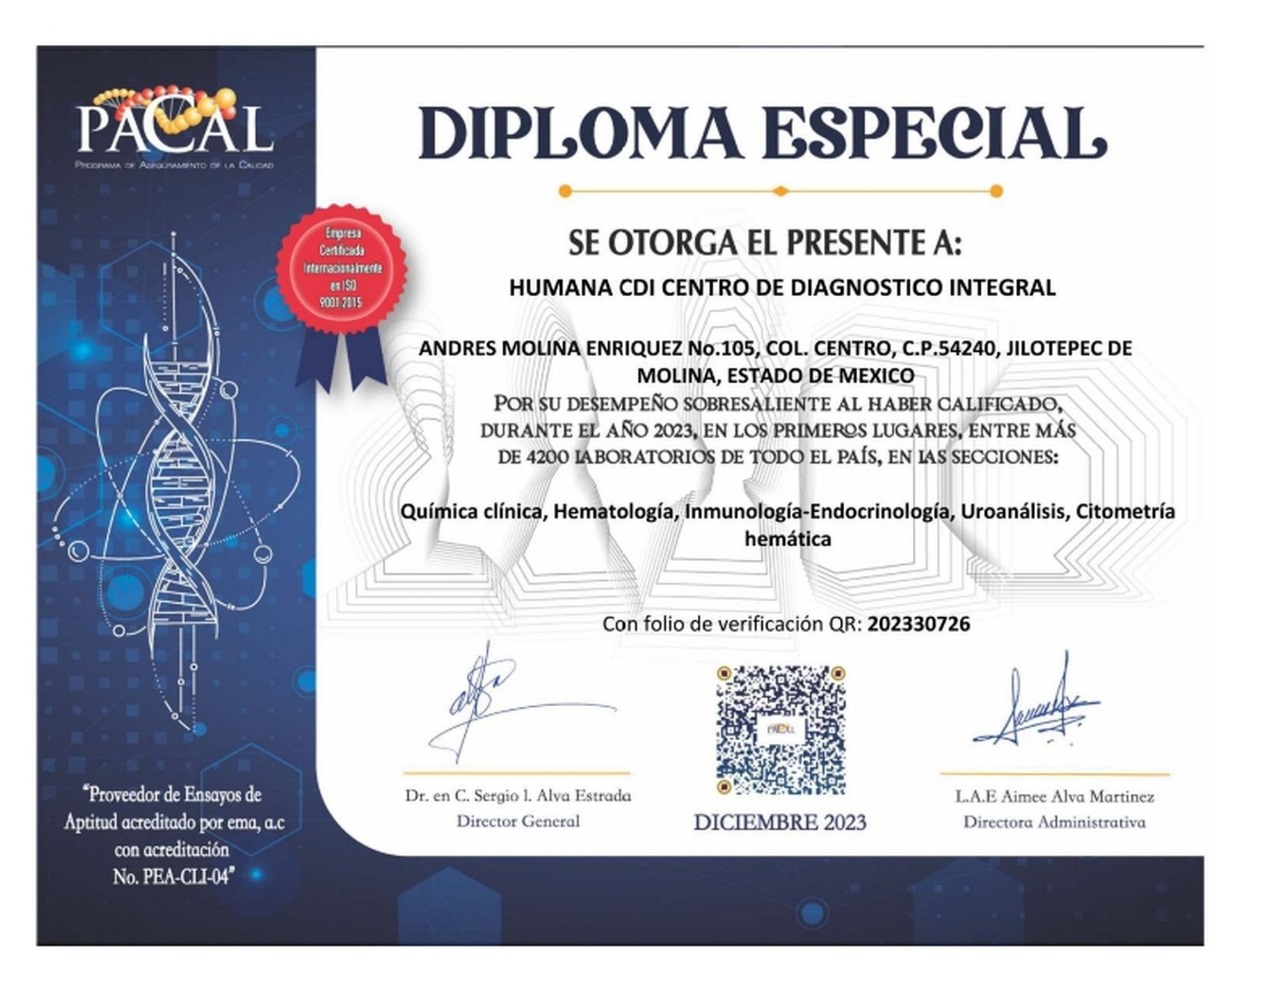 diploma especial de reconocimiento a Humana CDI centro de diagnostico integral en Jilotepec